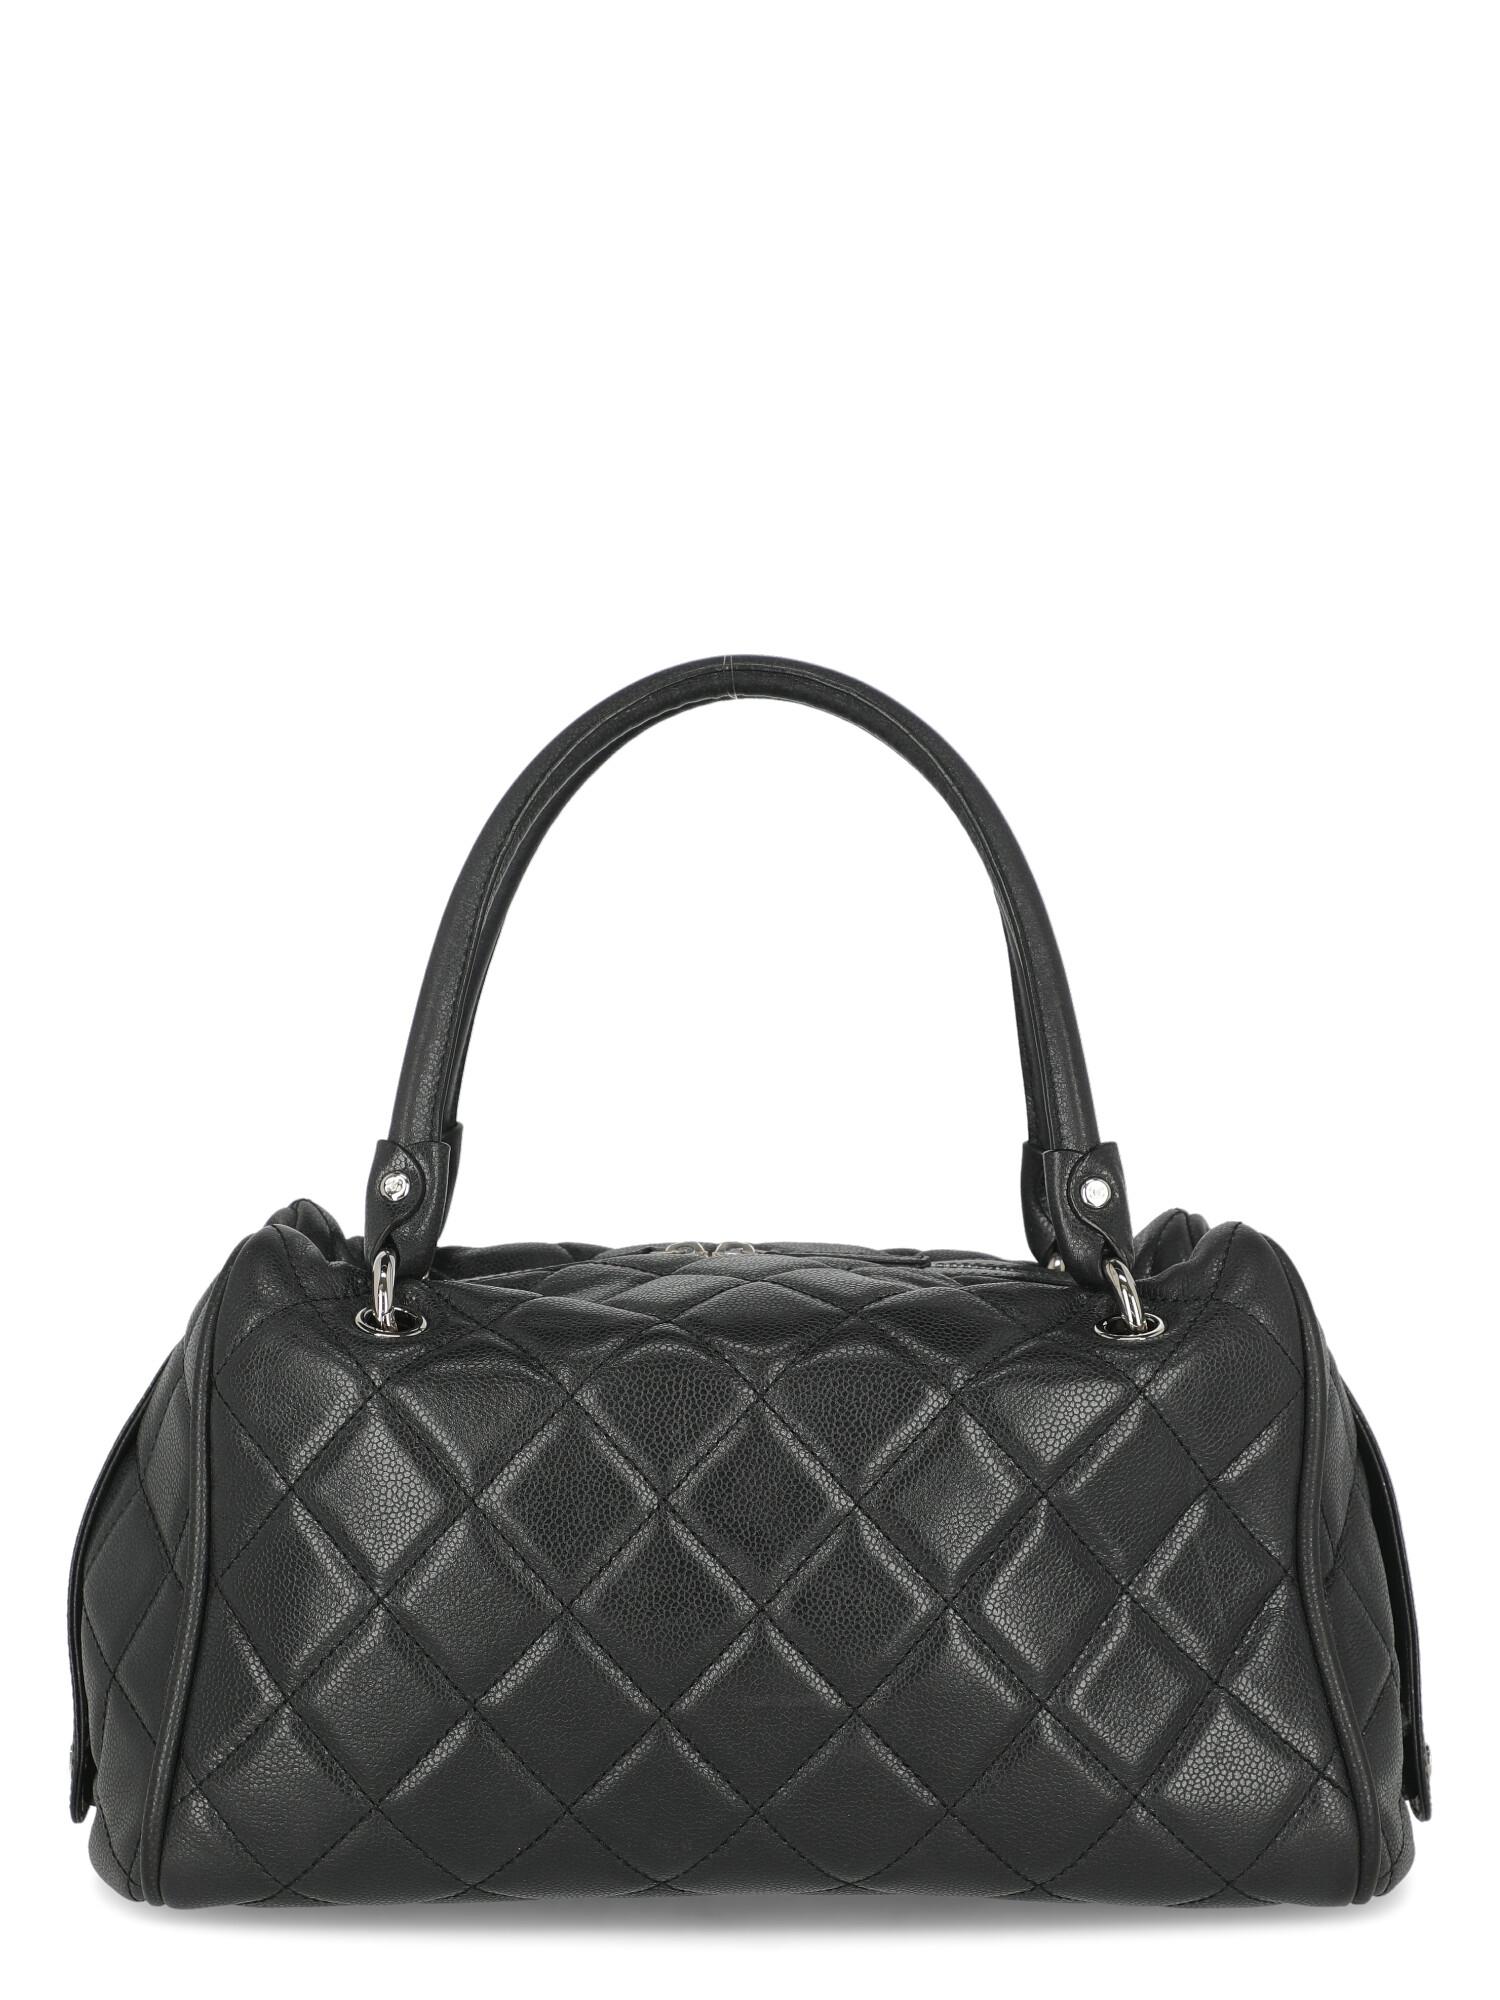 Chanel Women's Handbag Black Leather 1